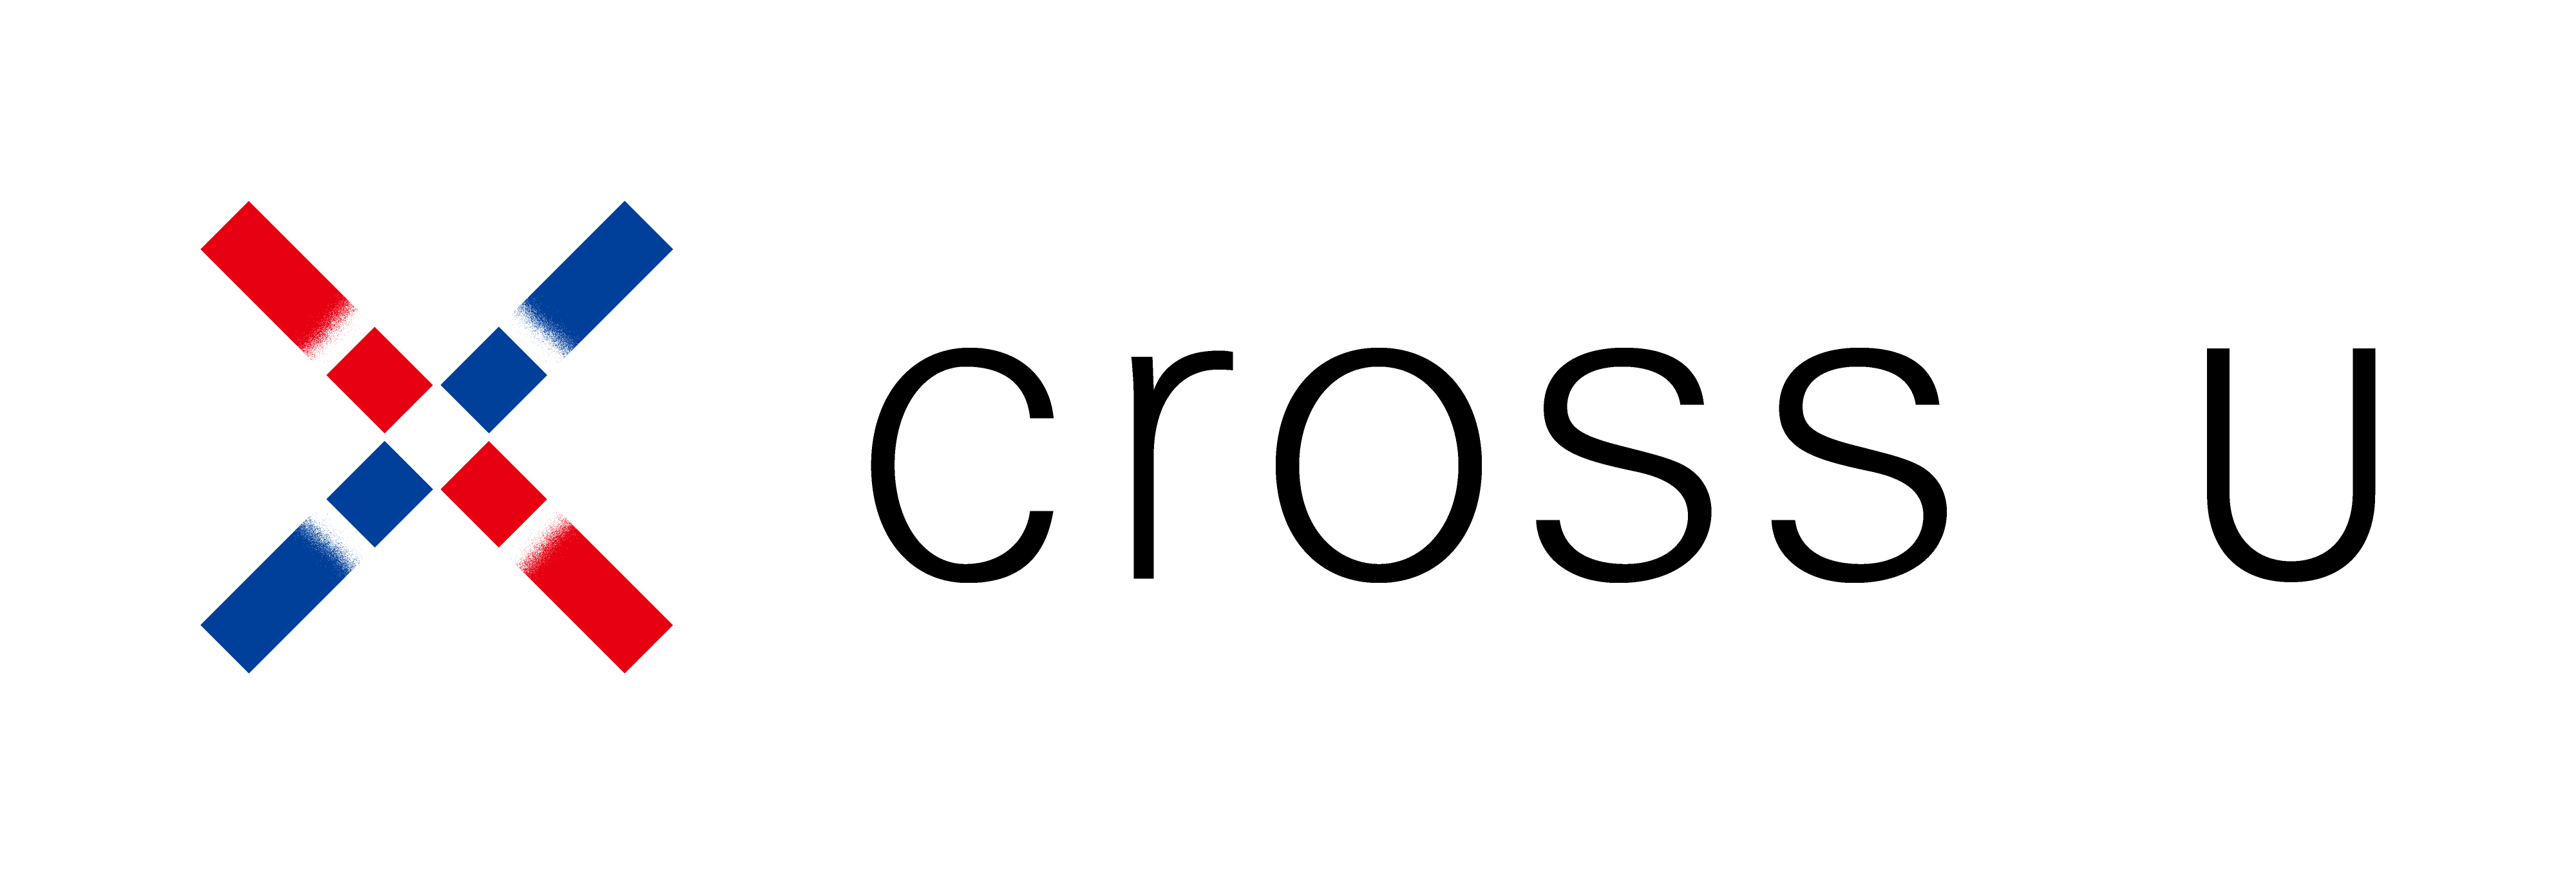 crossU logo basic